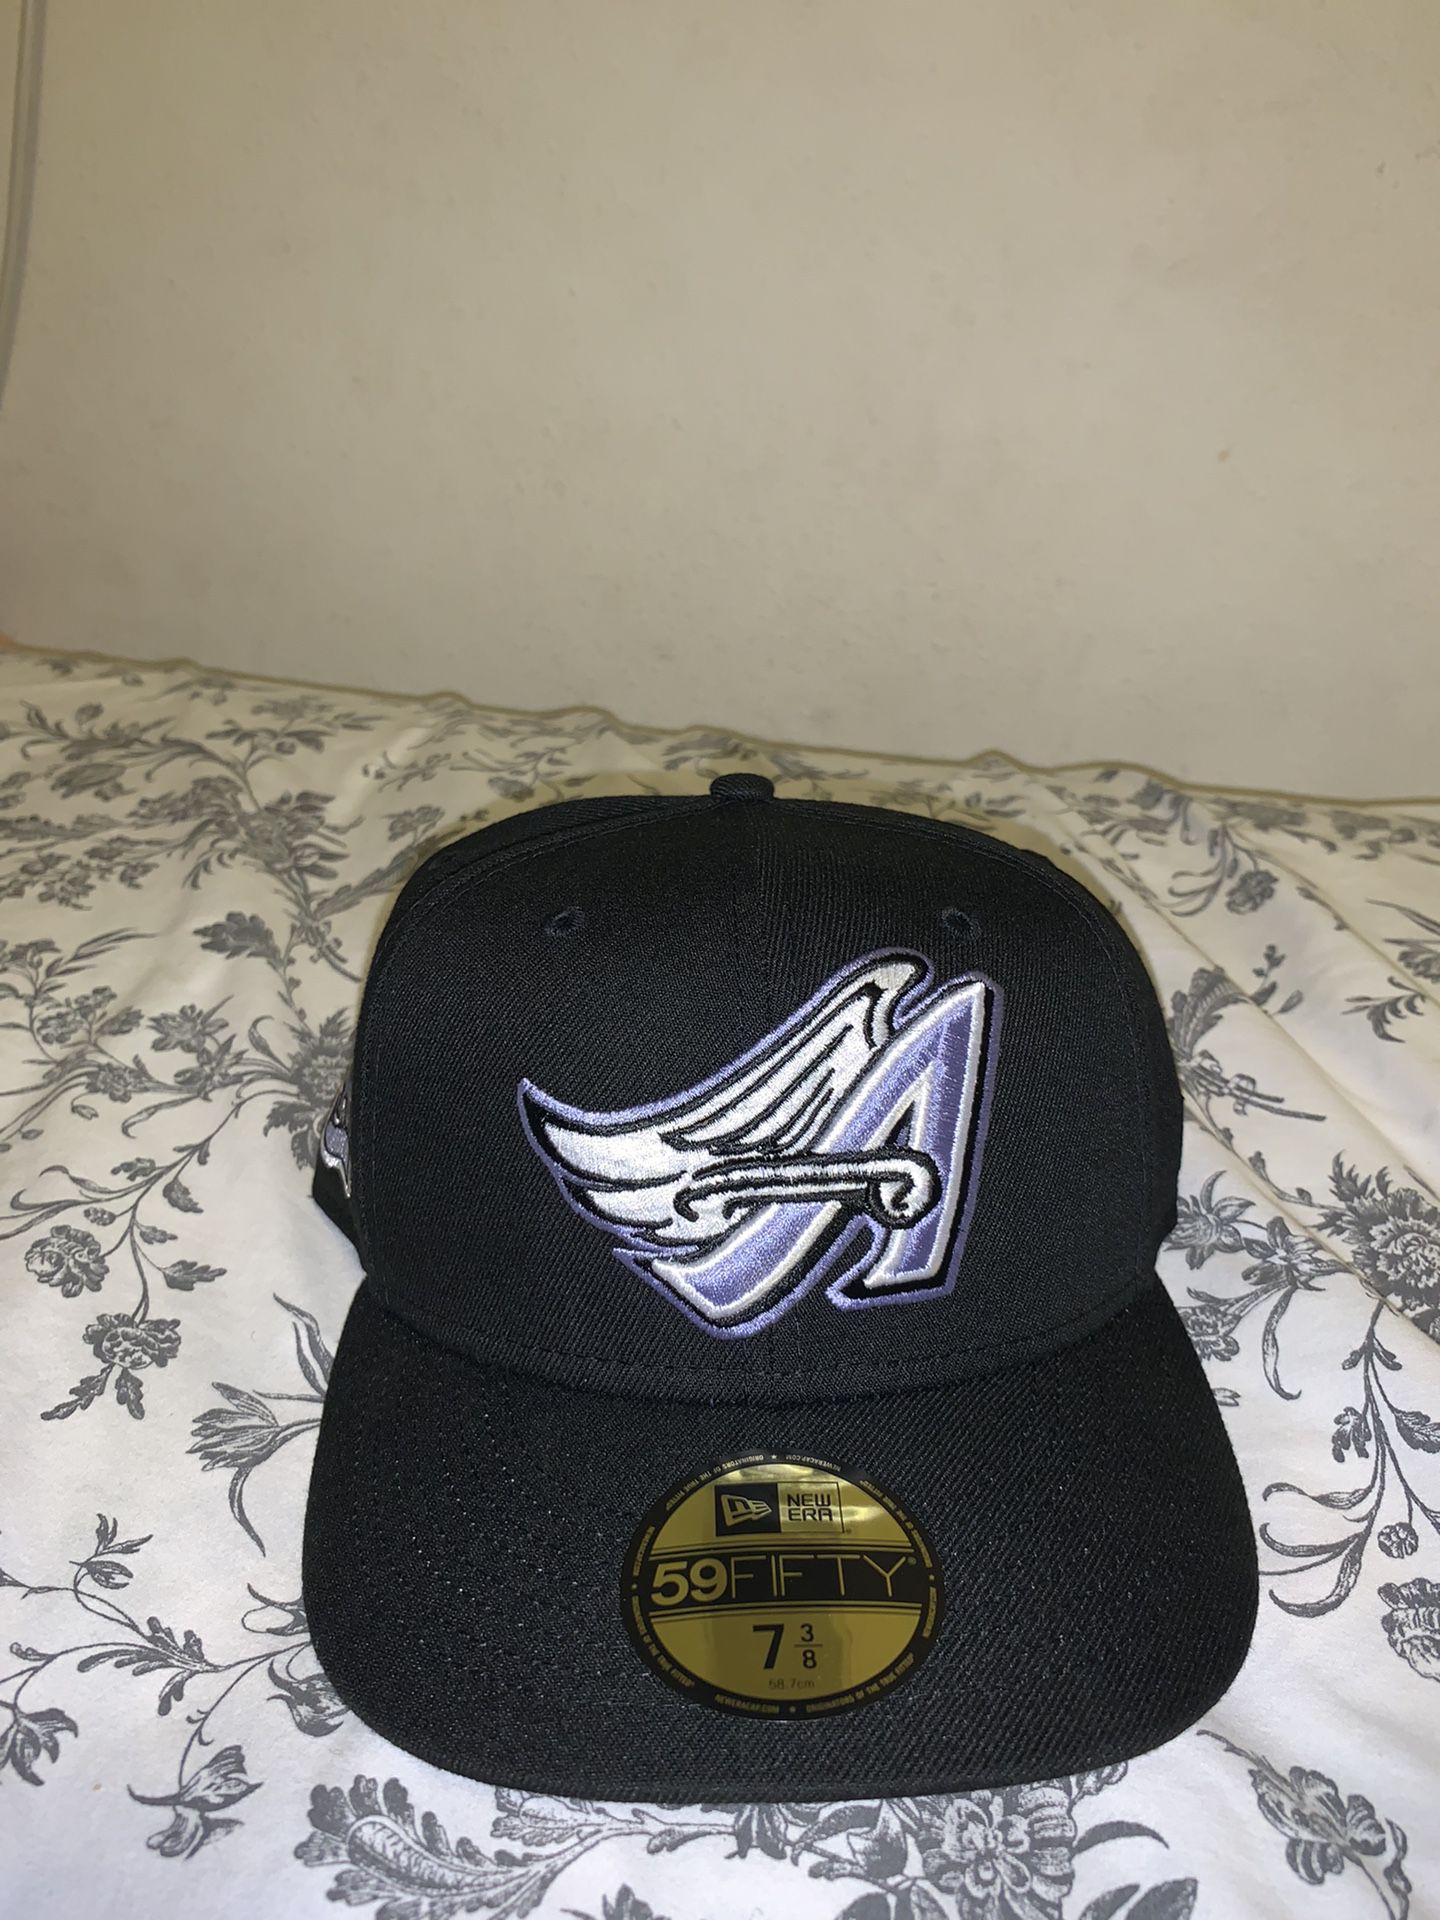 Anaheim Angels Fitted Hat , 40 Year Anniversary Patch. Lavender Bottom. for  Sale in Anaheim, CA - OfferUp